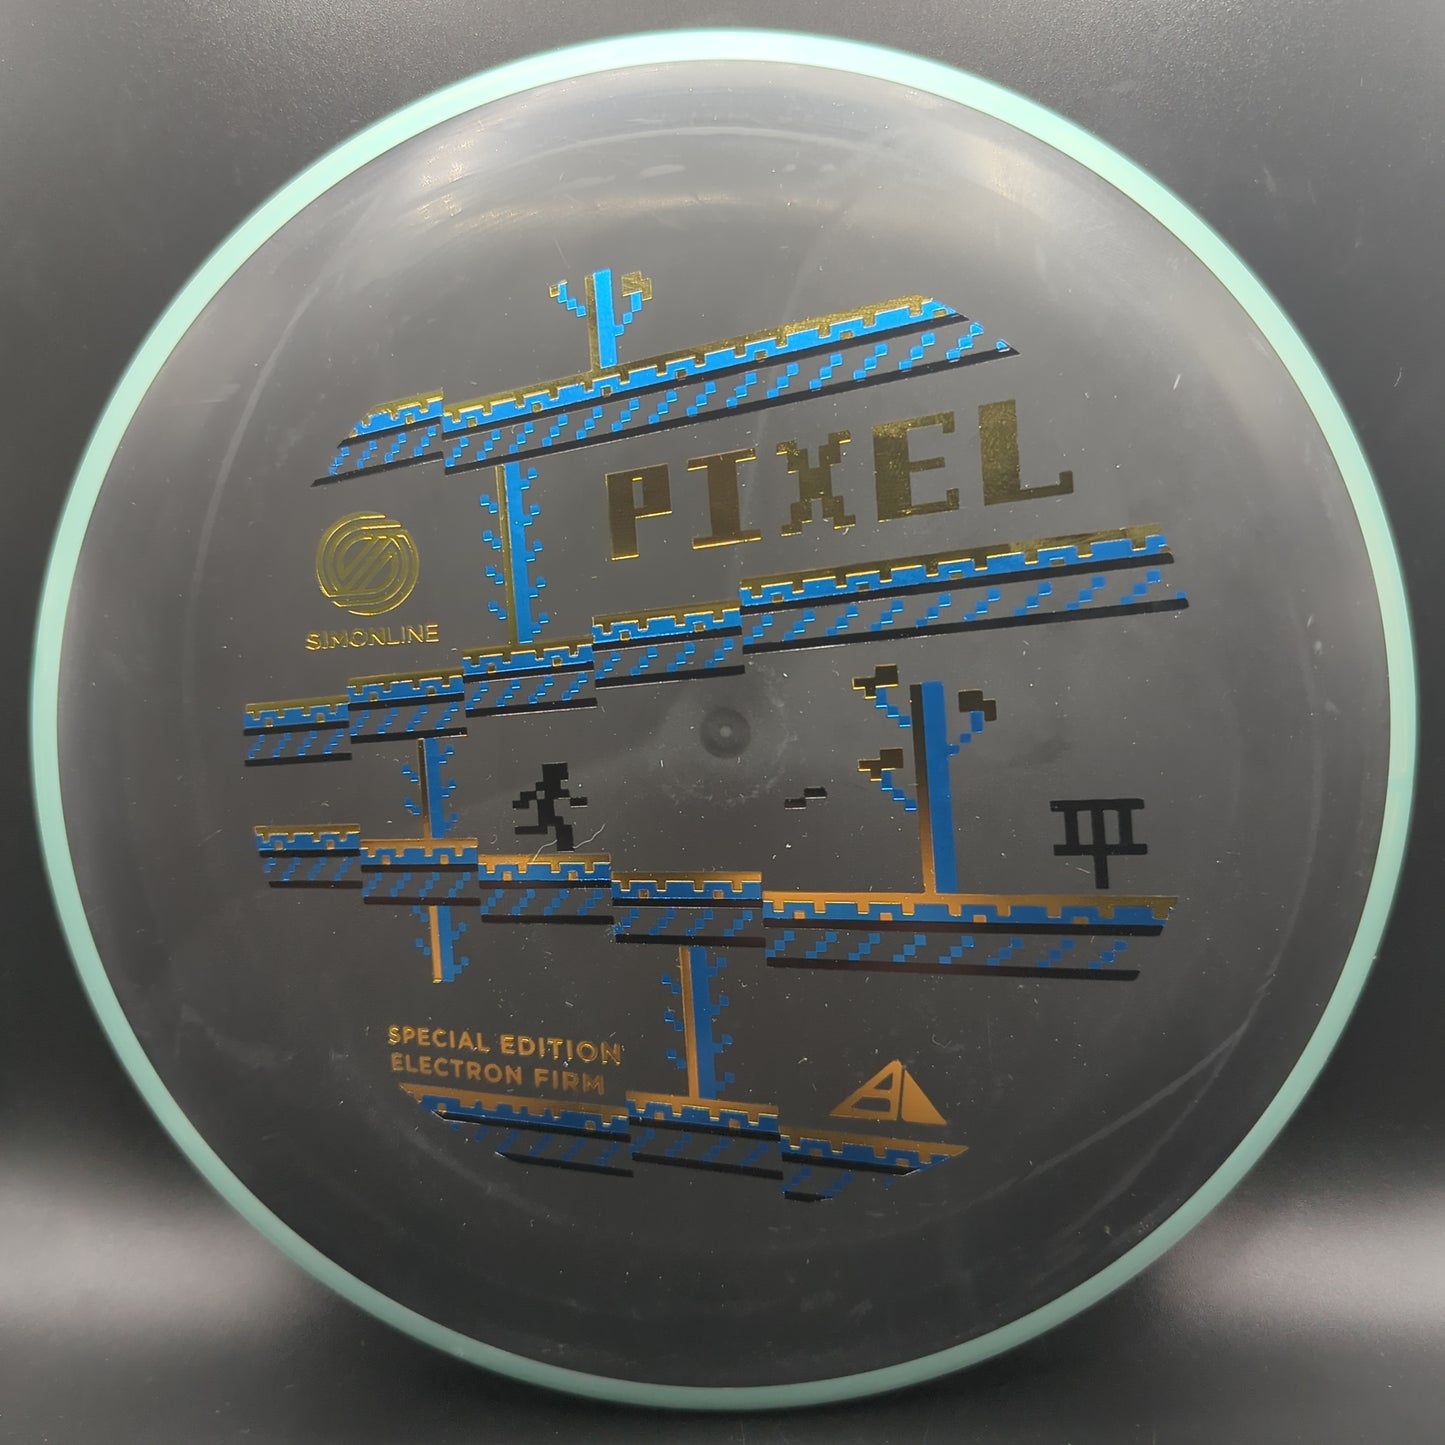 Axiom Simon Line Electron Firm Pixel Special Edition